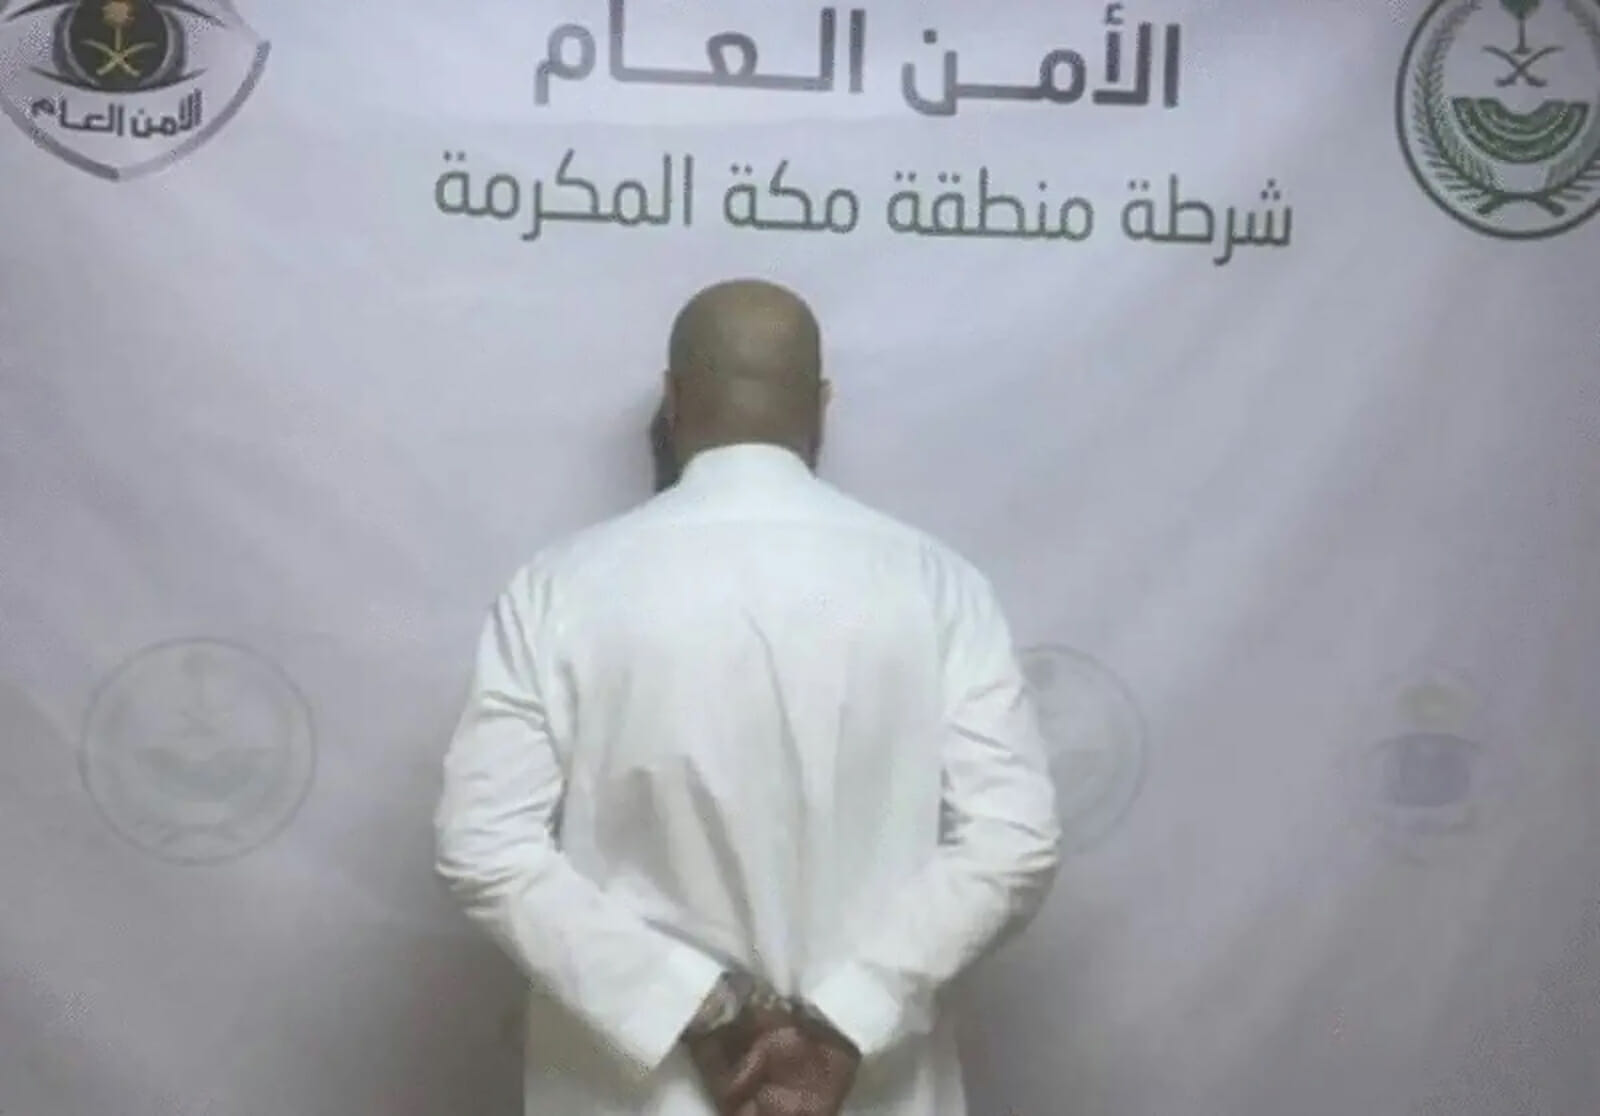 جزائري يقتل اثنين في مكة watanserb.com